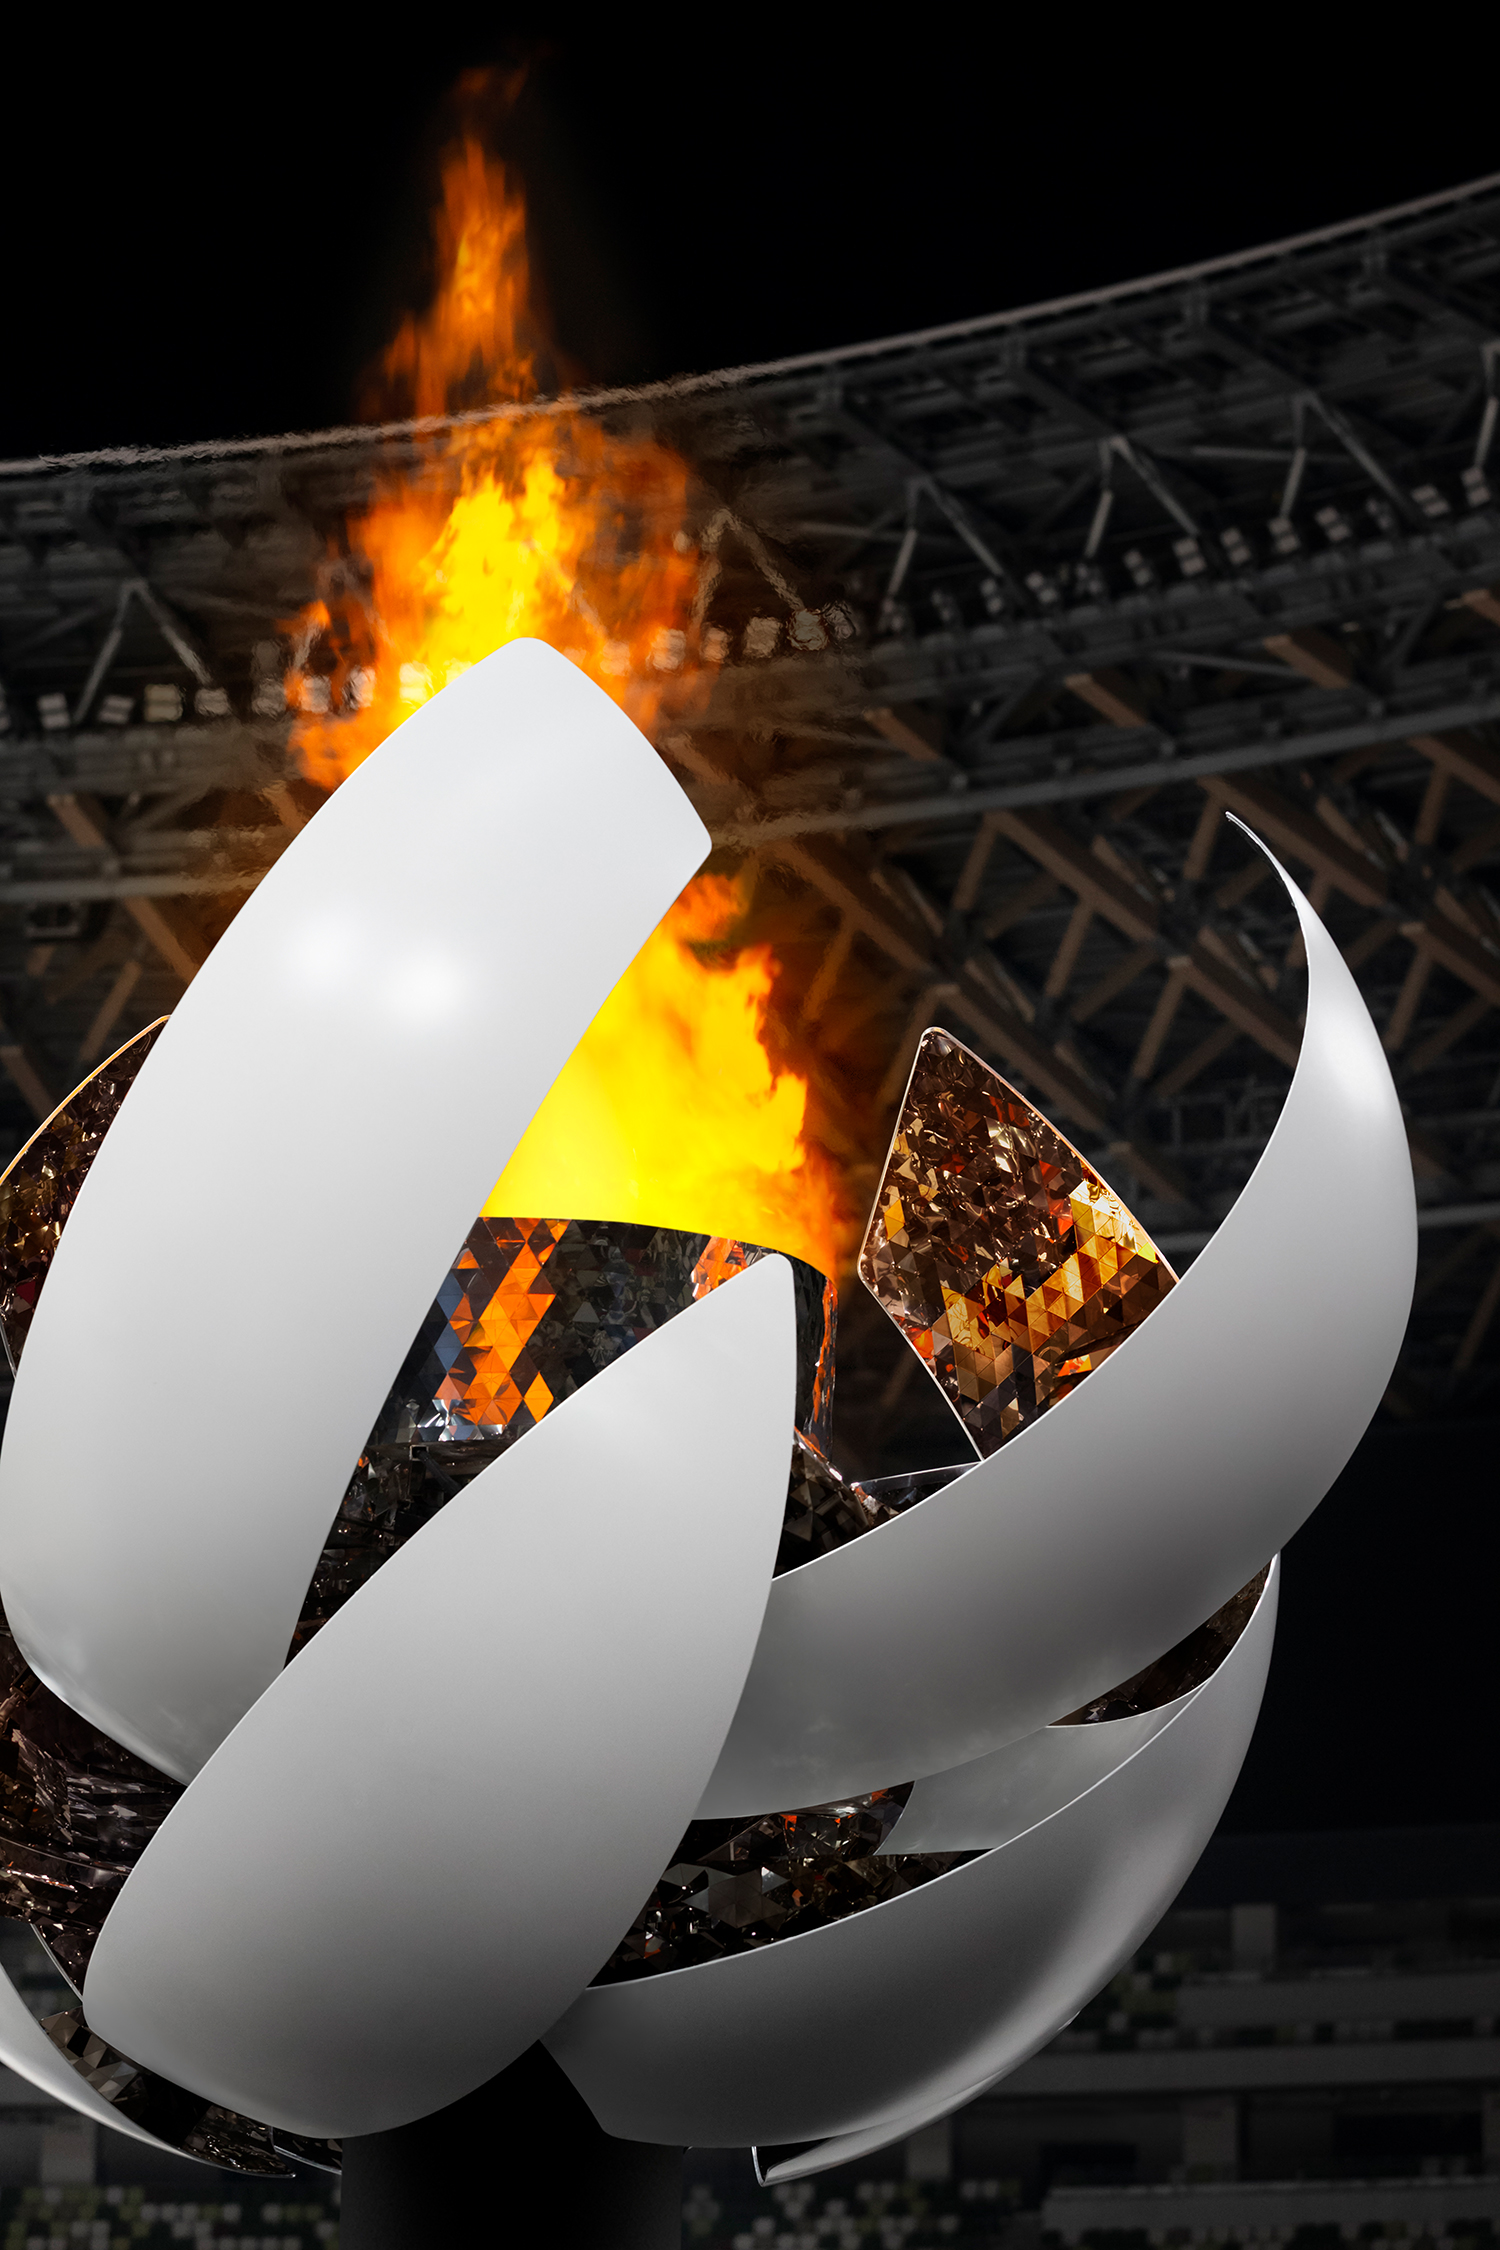 Tokyo2020 Olympic Cauldron / nendo